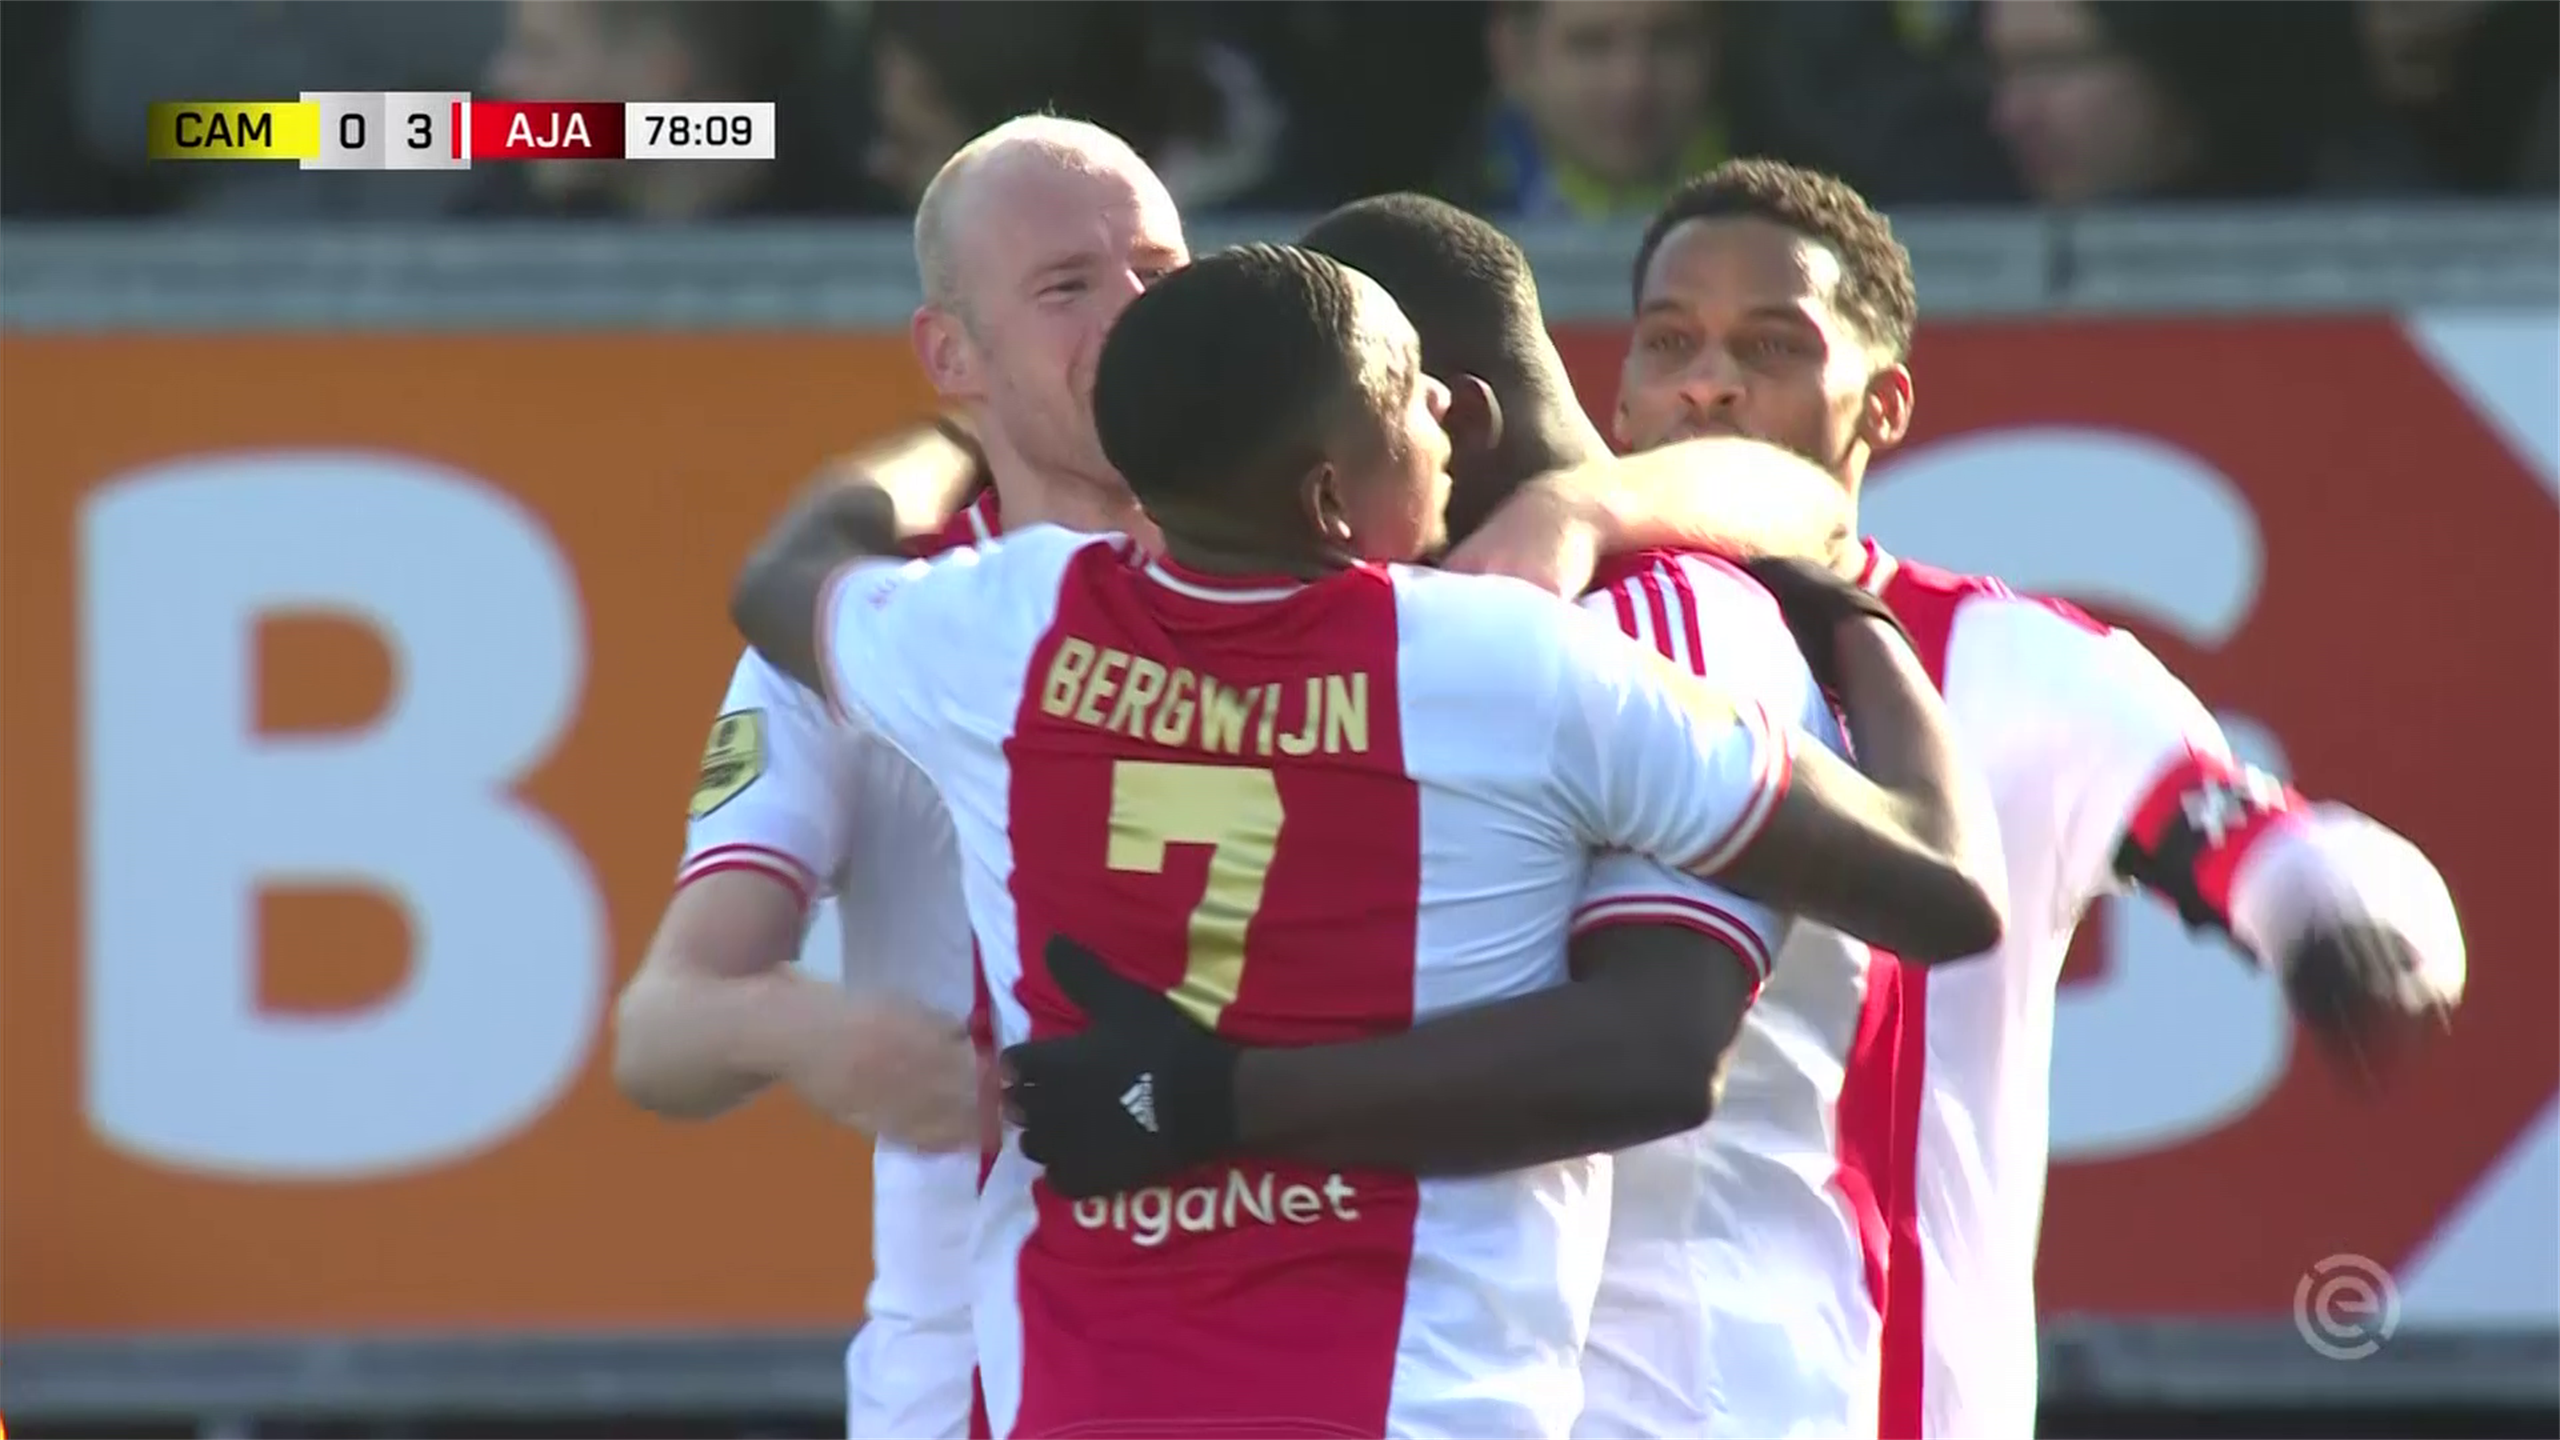 Troppo gap tra Cambuur e Ajax: 0-5, gli highlights in 2'